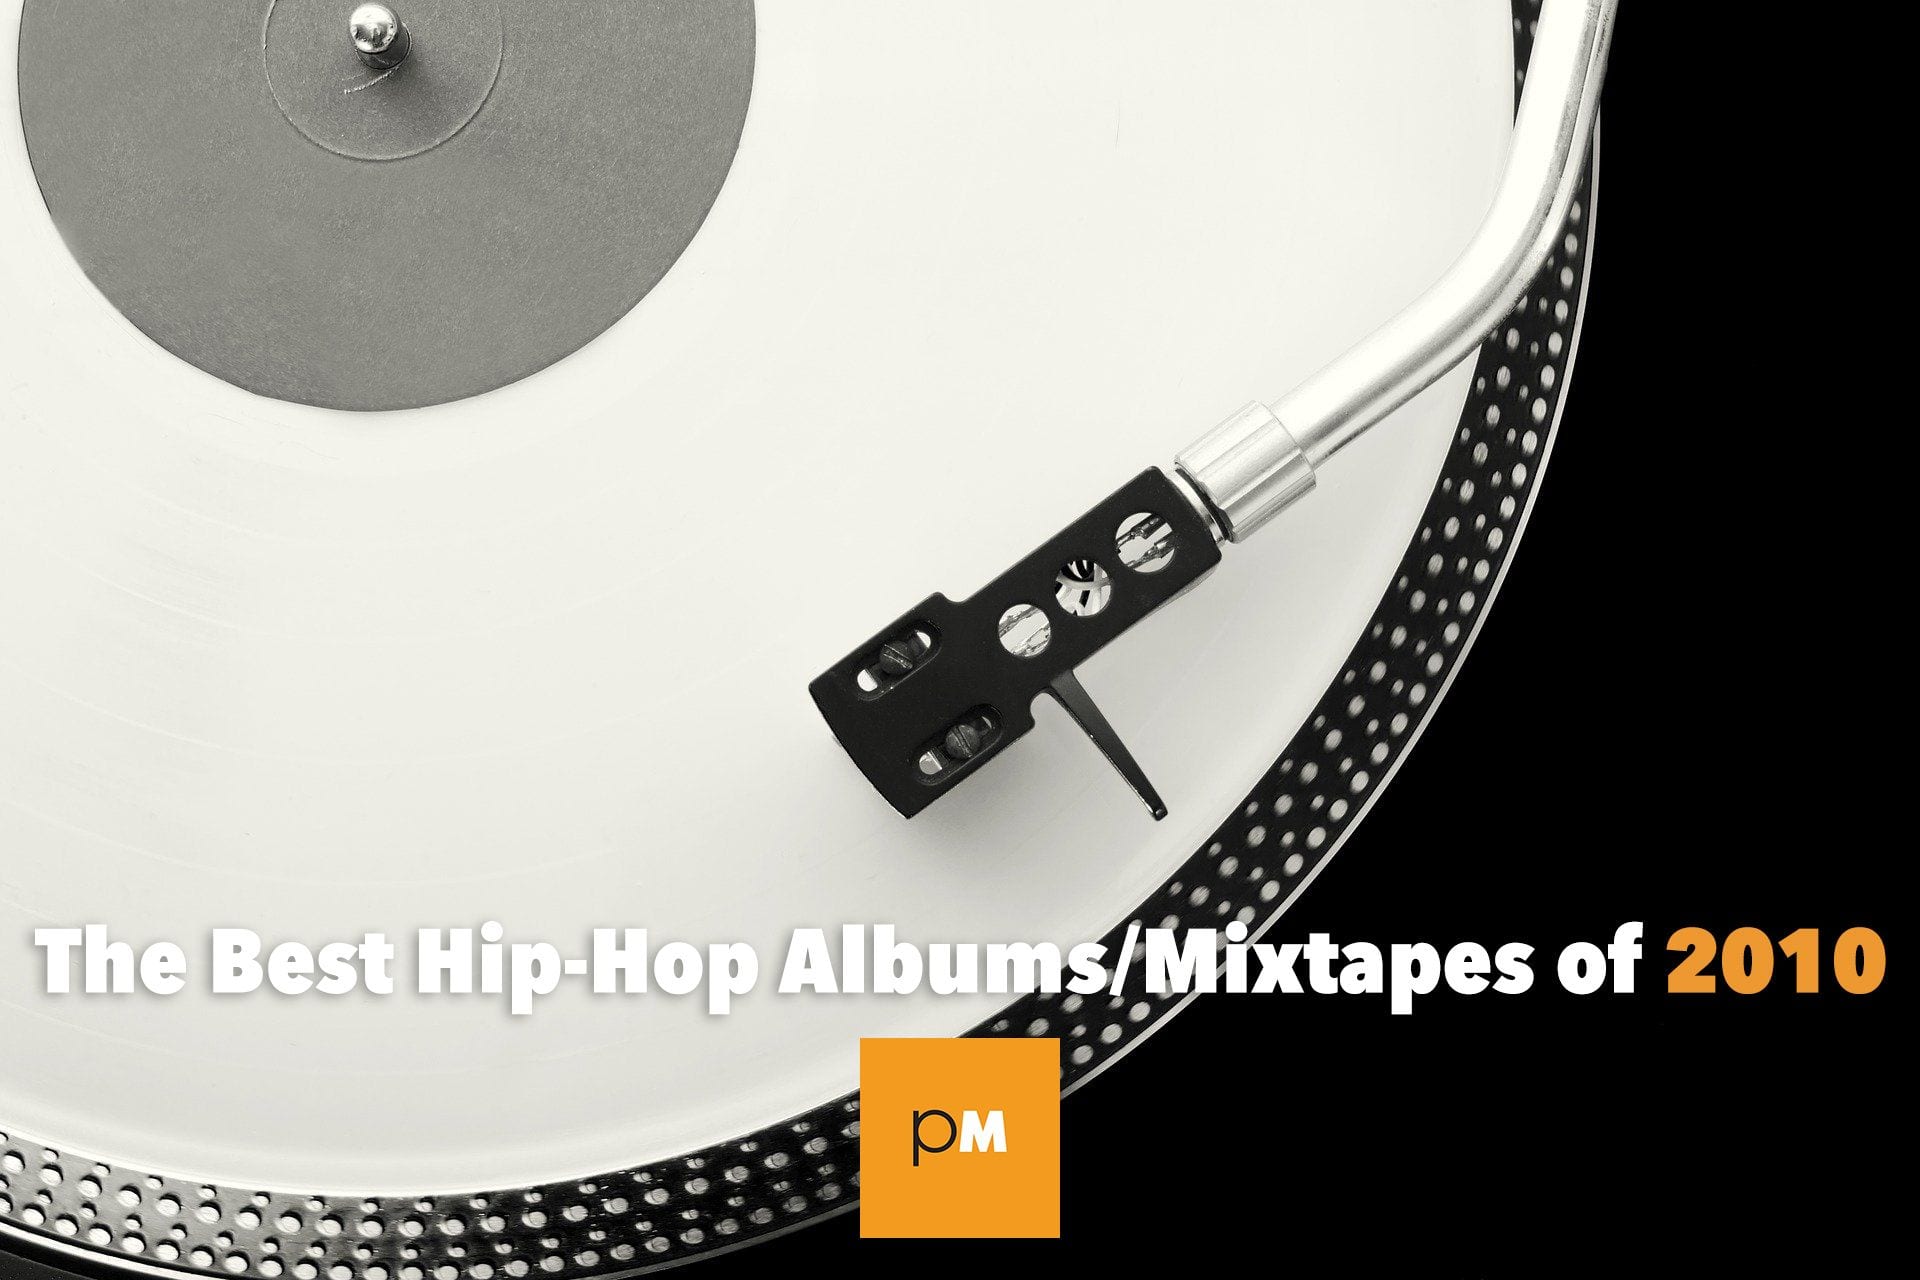 The Best Hip-Hop Albums/Mixtapes of 2010